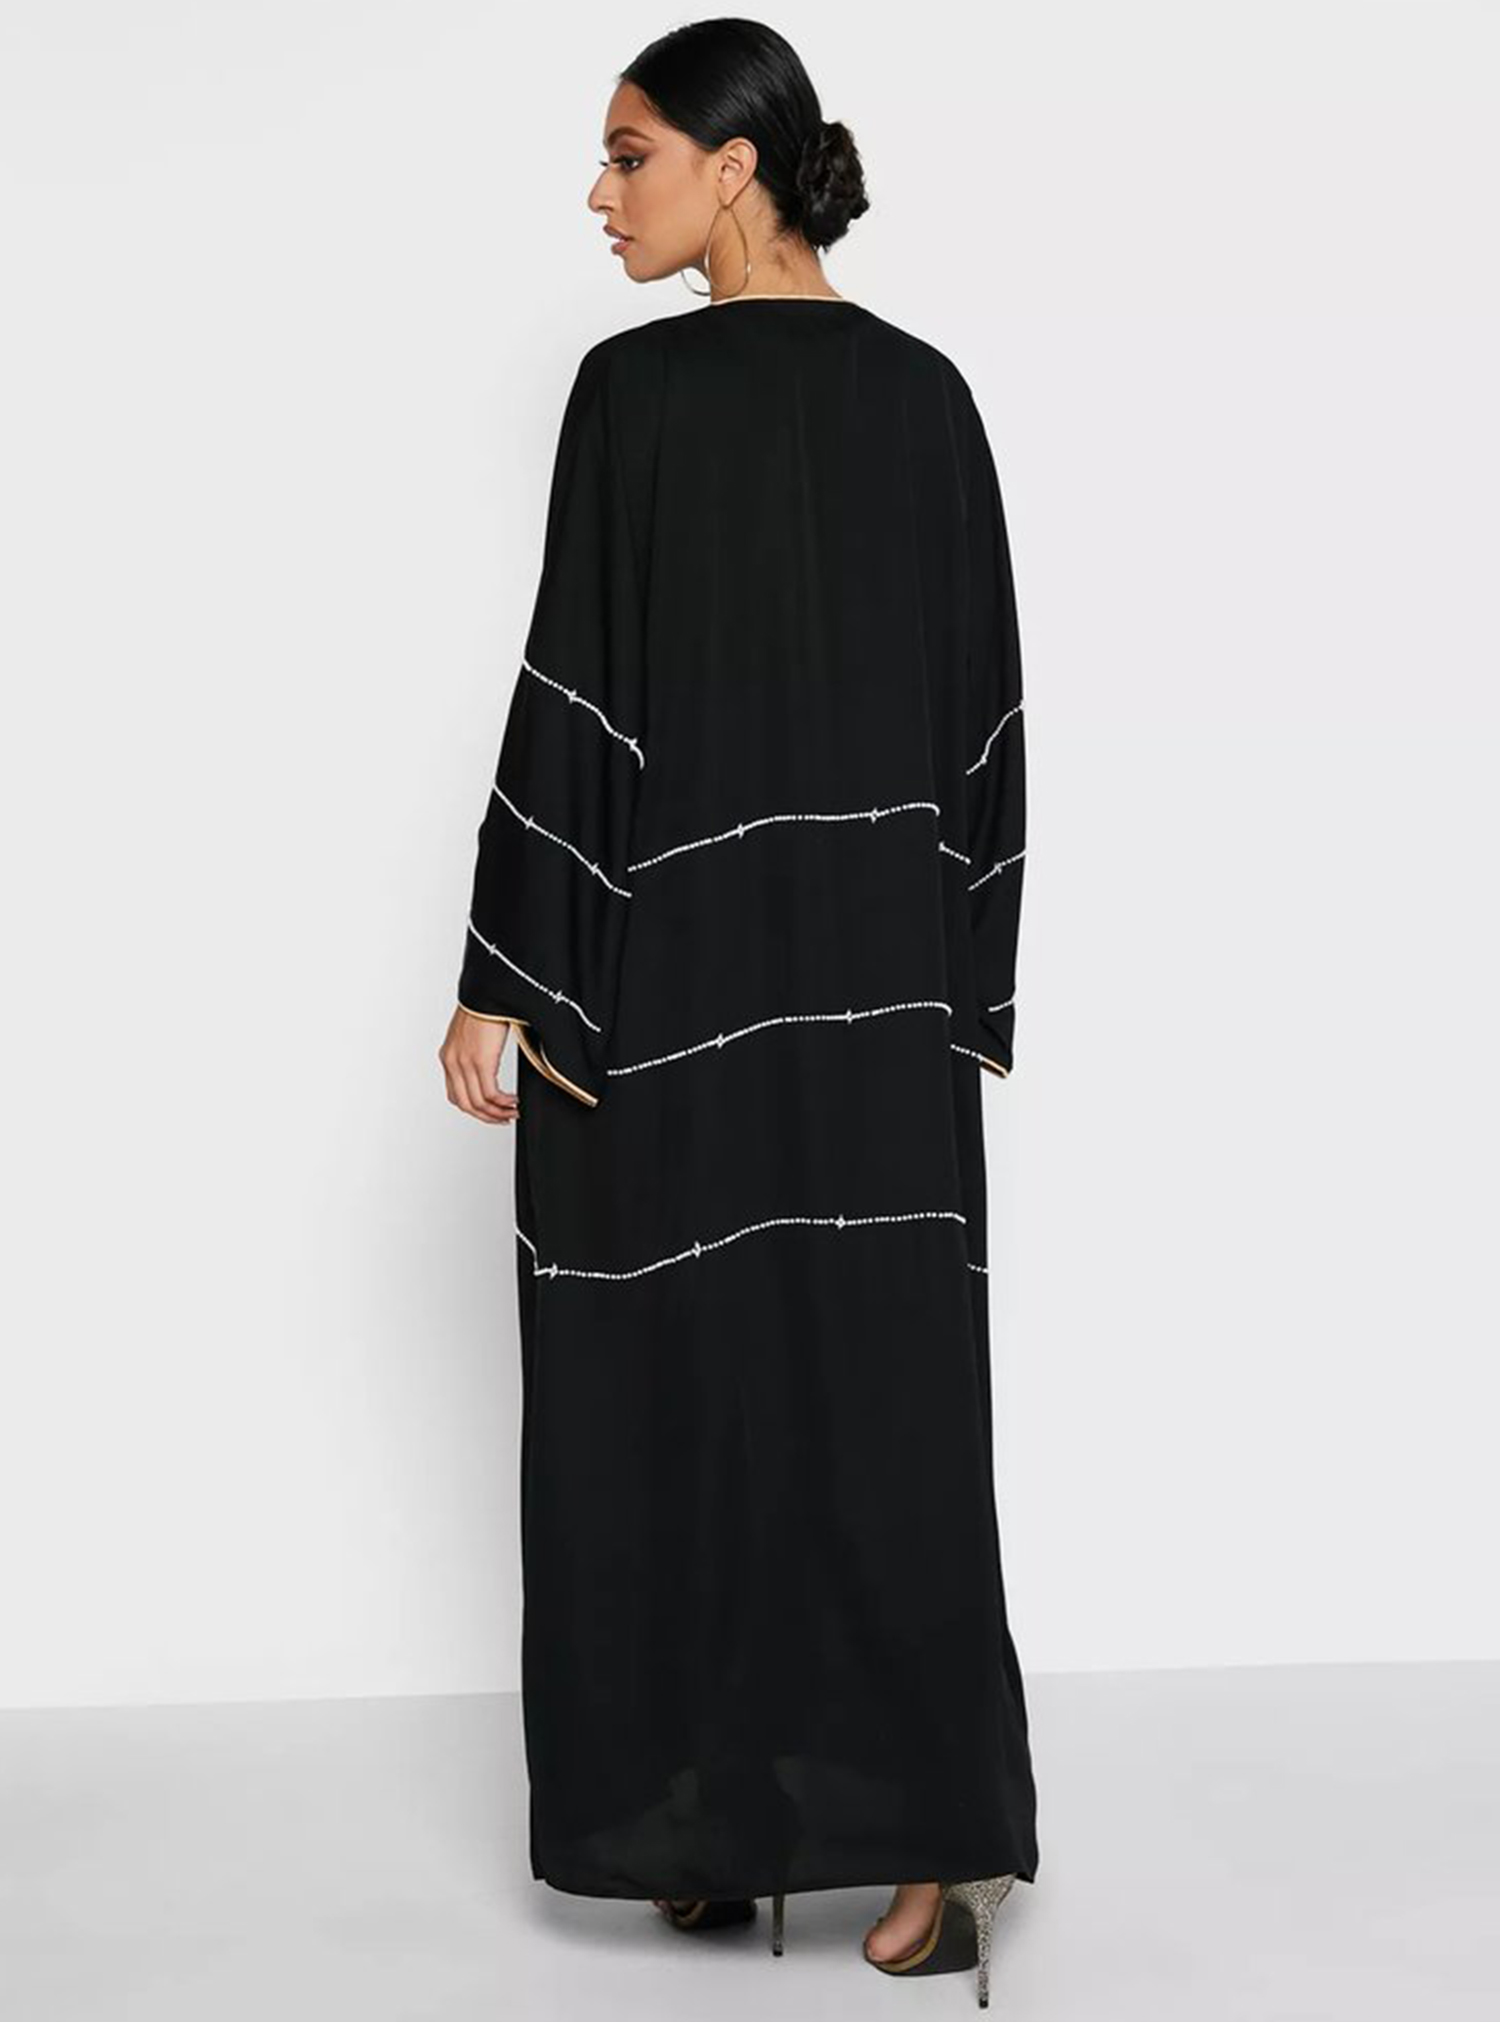 Alif-5216 Abaya Matching hijab included. High quality nida fabric ...